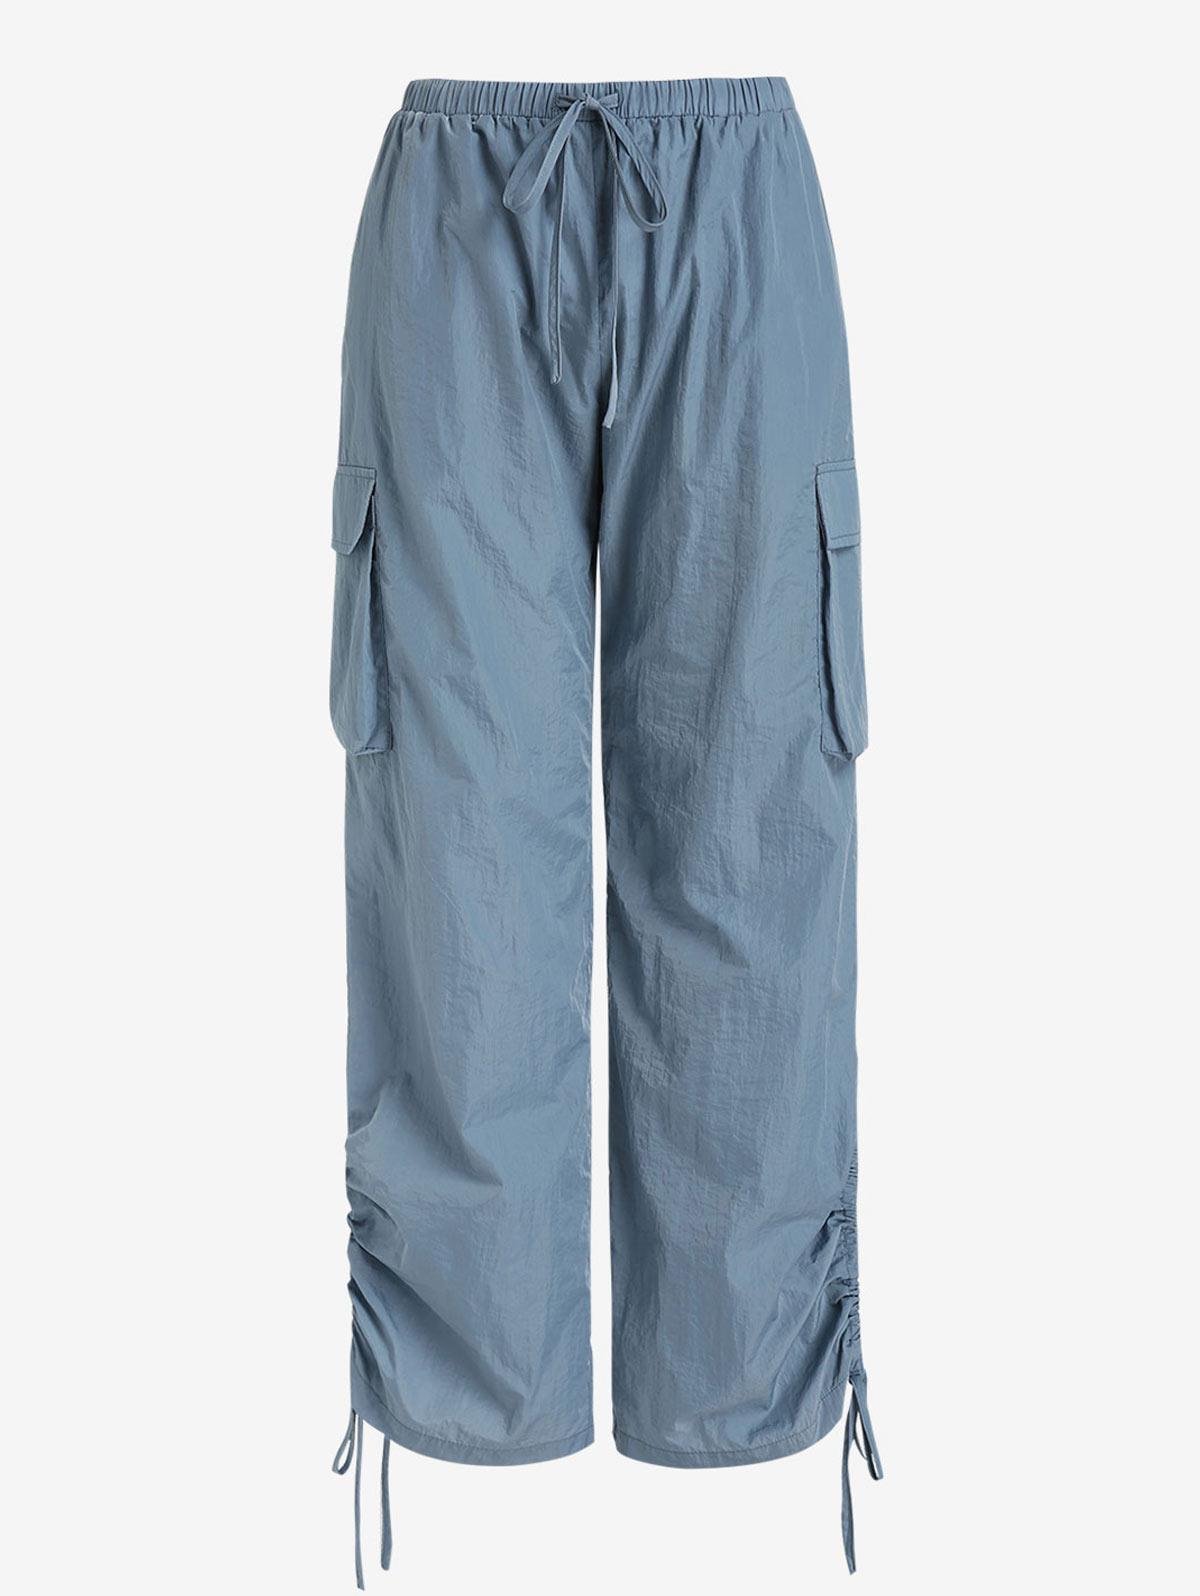 ZAFUL Drawstring Cinched Pockets Cargo Pants M Light blue